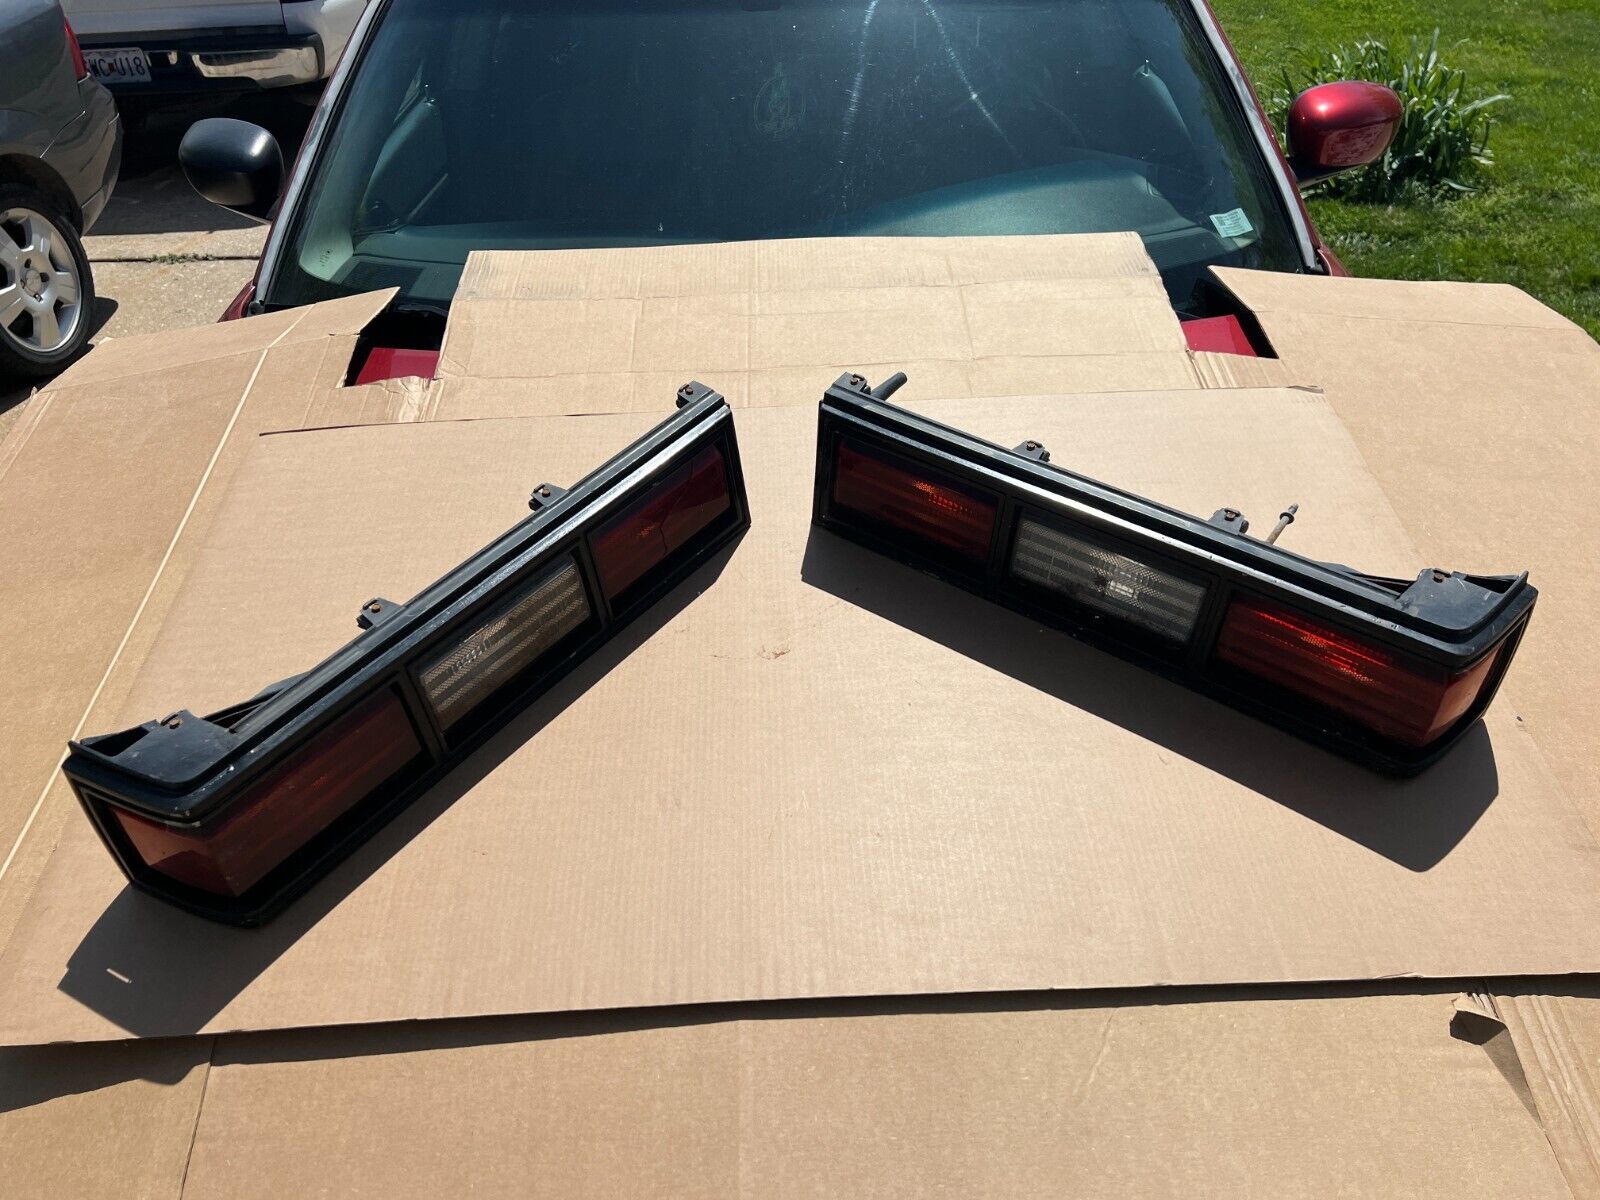 1979 Chevy Malibu Tail Lights rear taillights parts repair